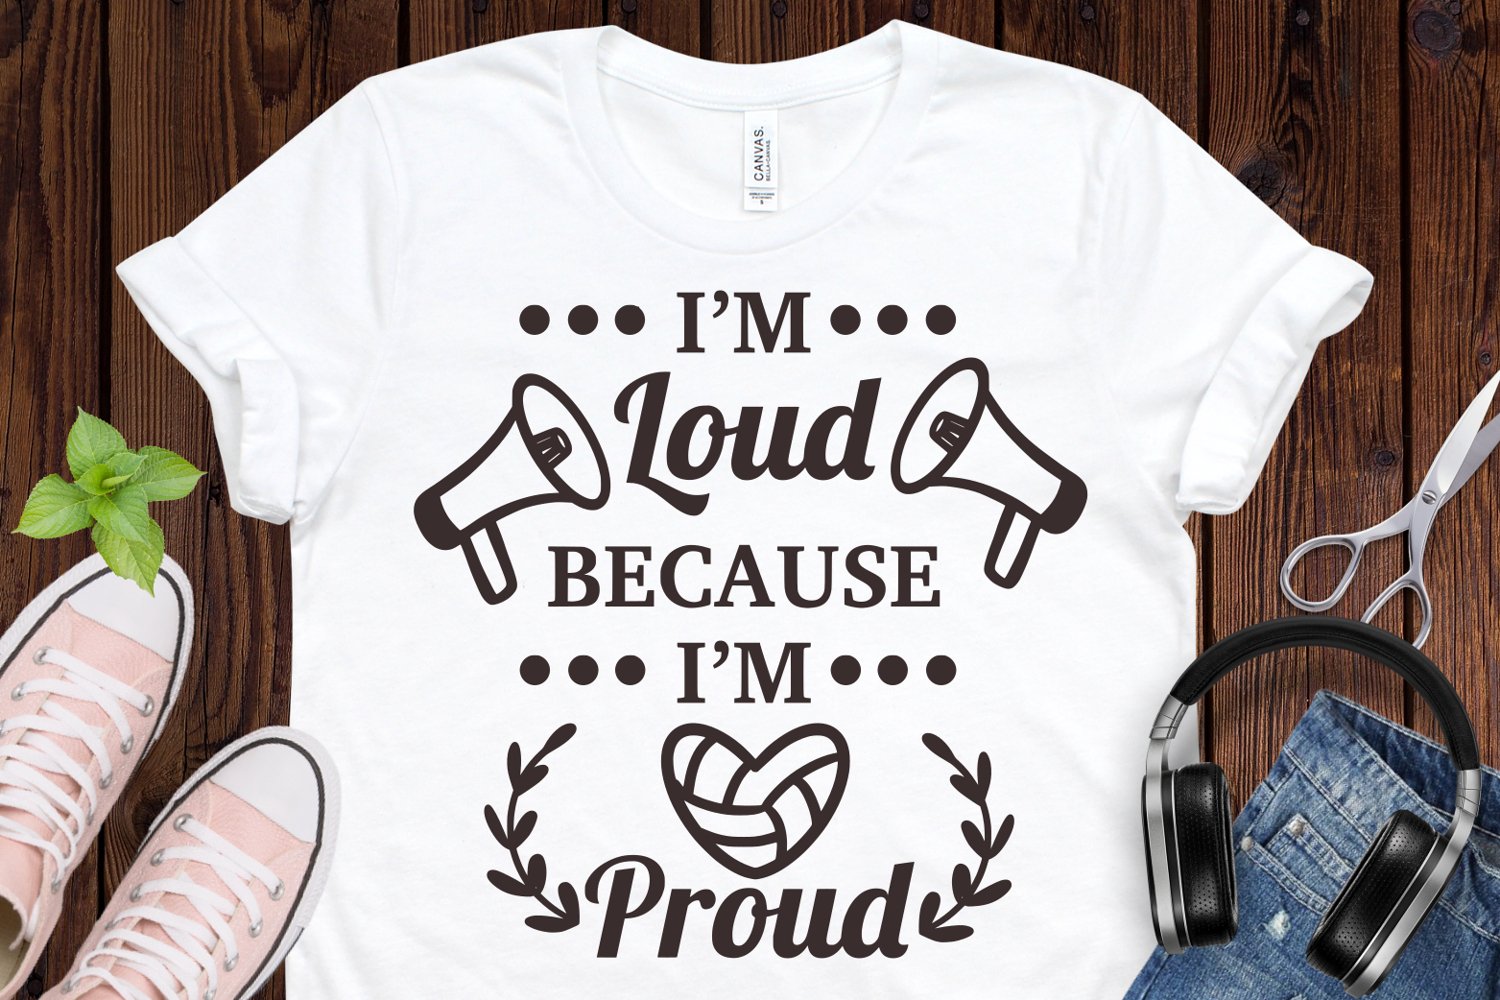 I'm loud because I'm proud - t-shirt design.